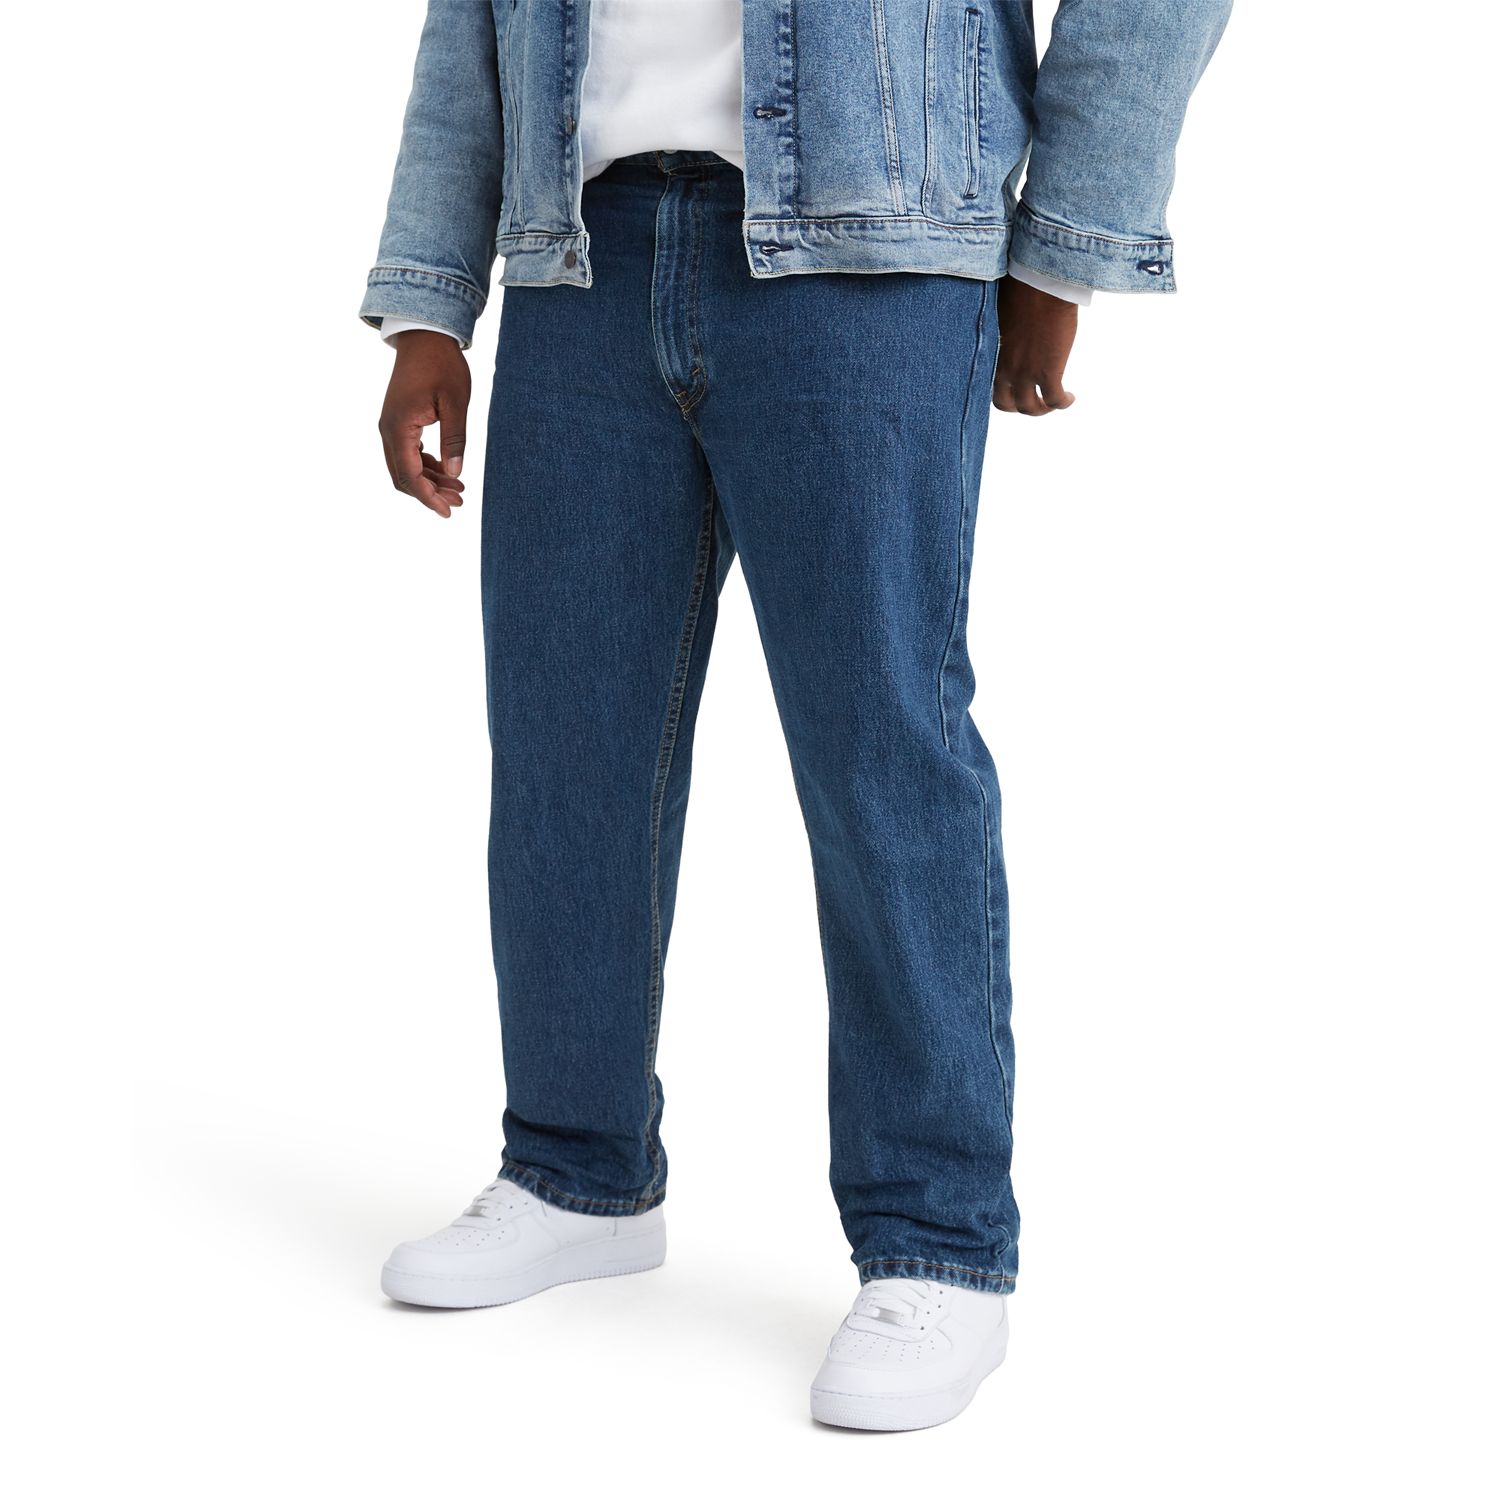 505 jeans mens